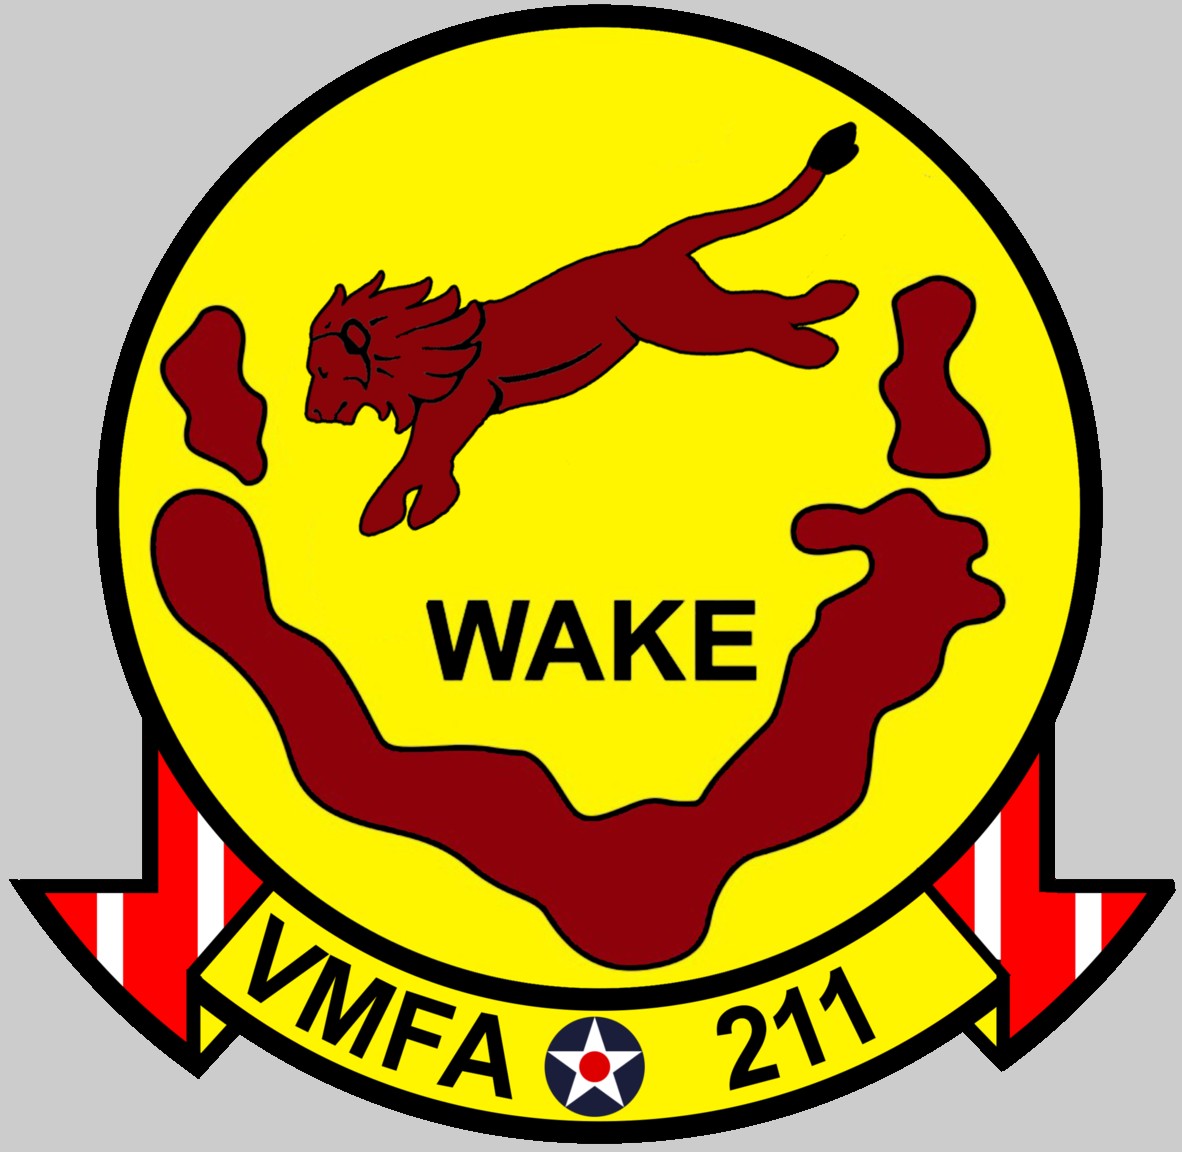 vmfa-211 wake island avengers insignia crest patch badge jsf marine fighter attack squadron usmc 02x